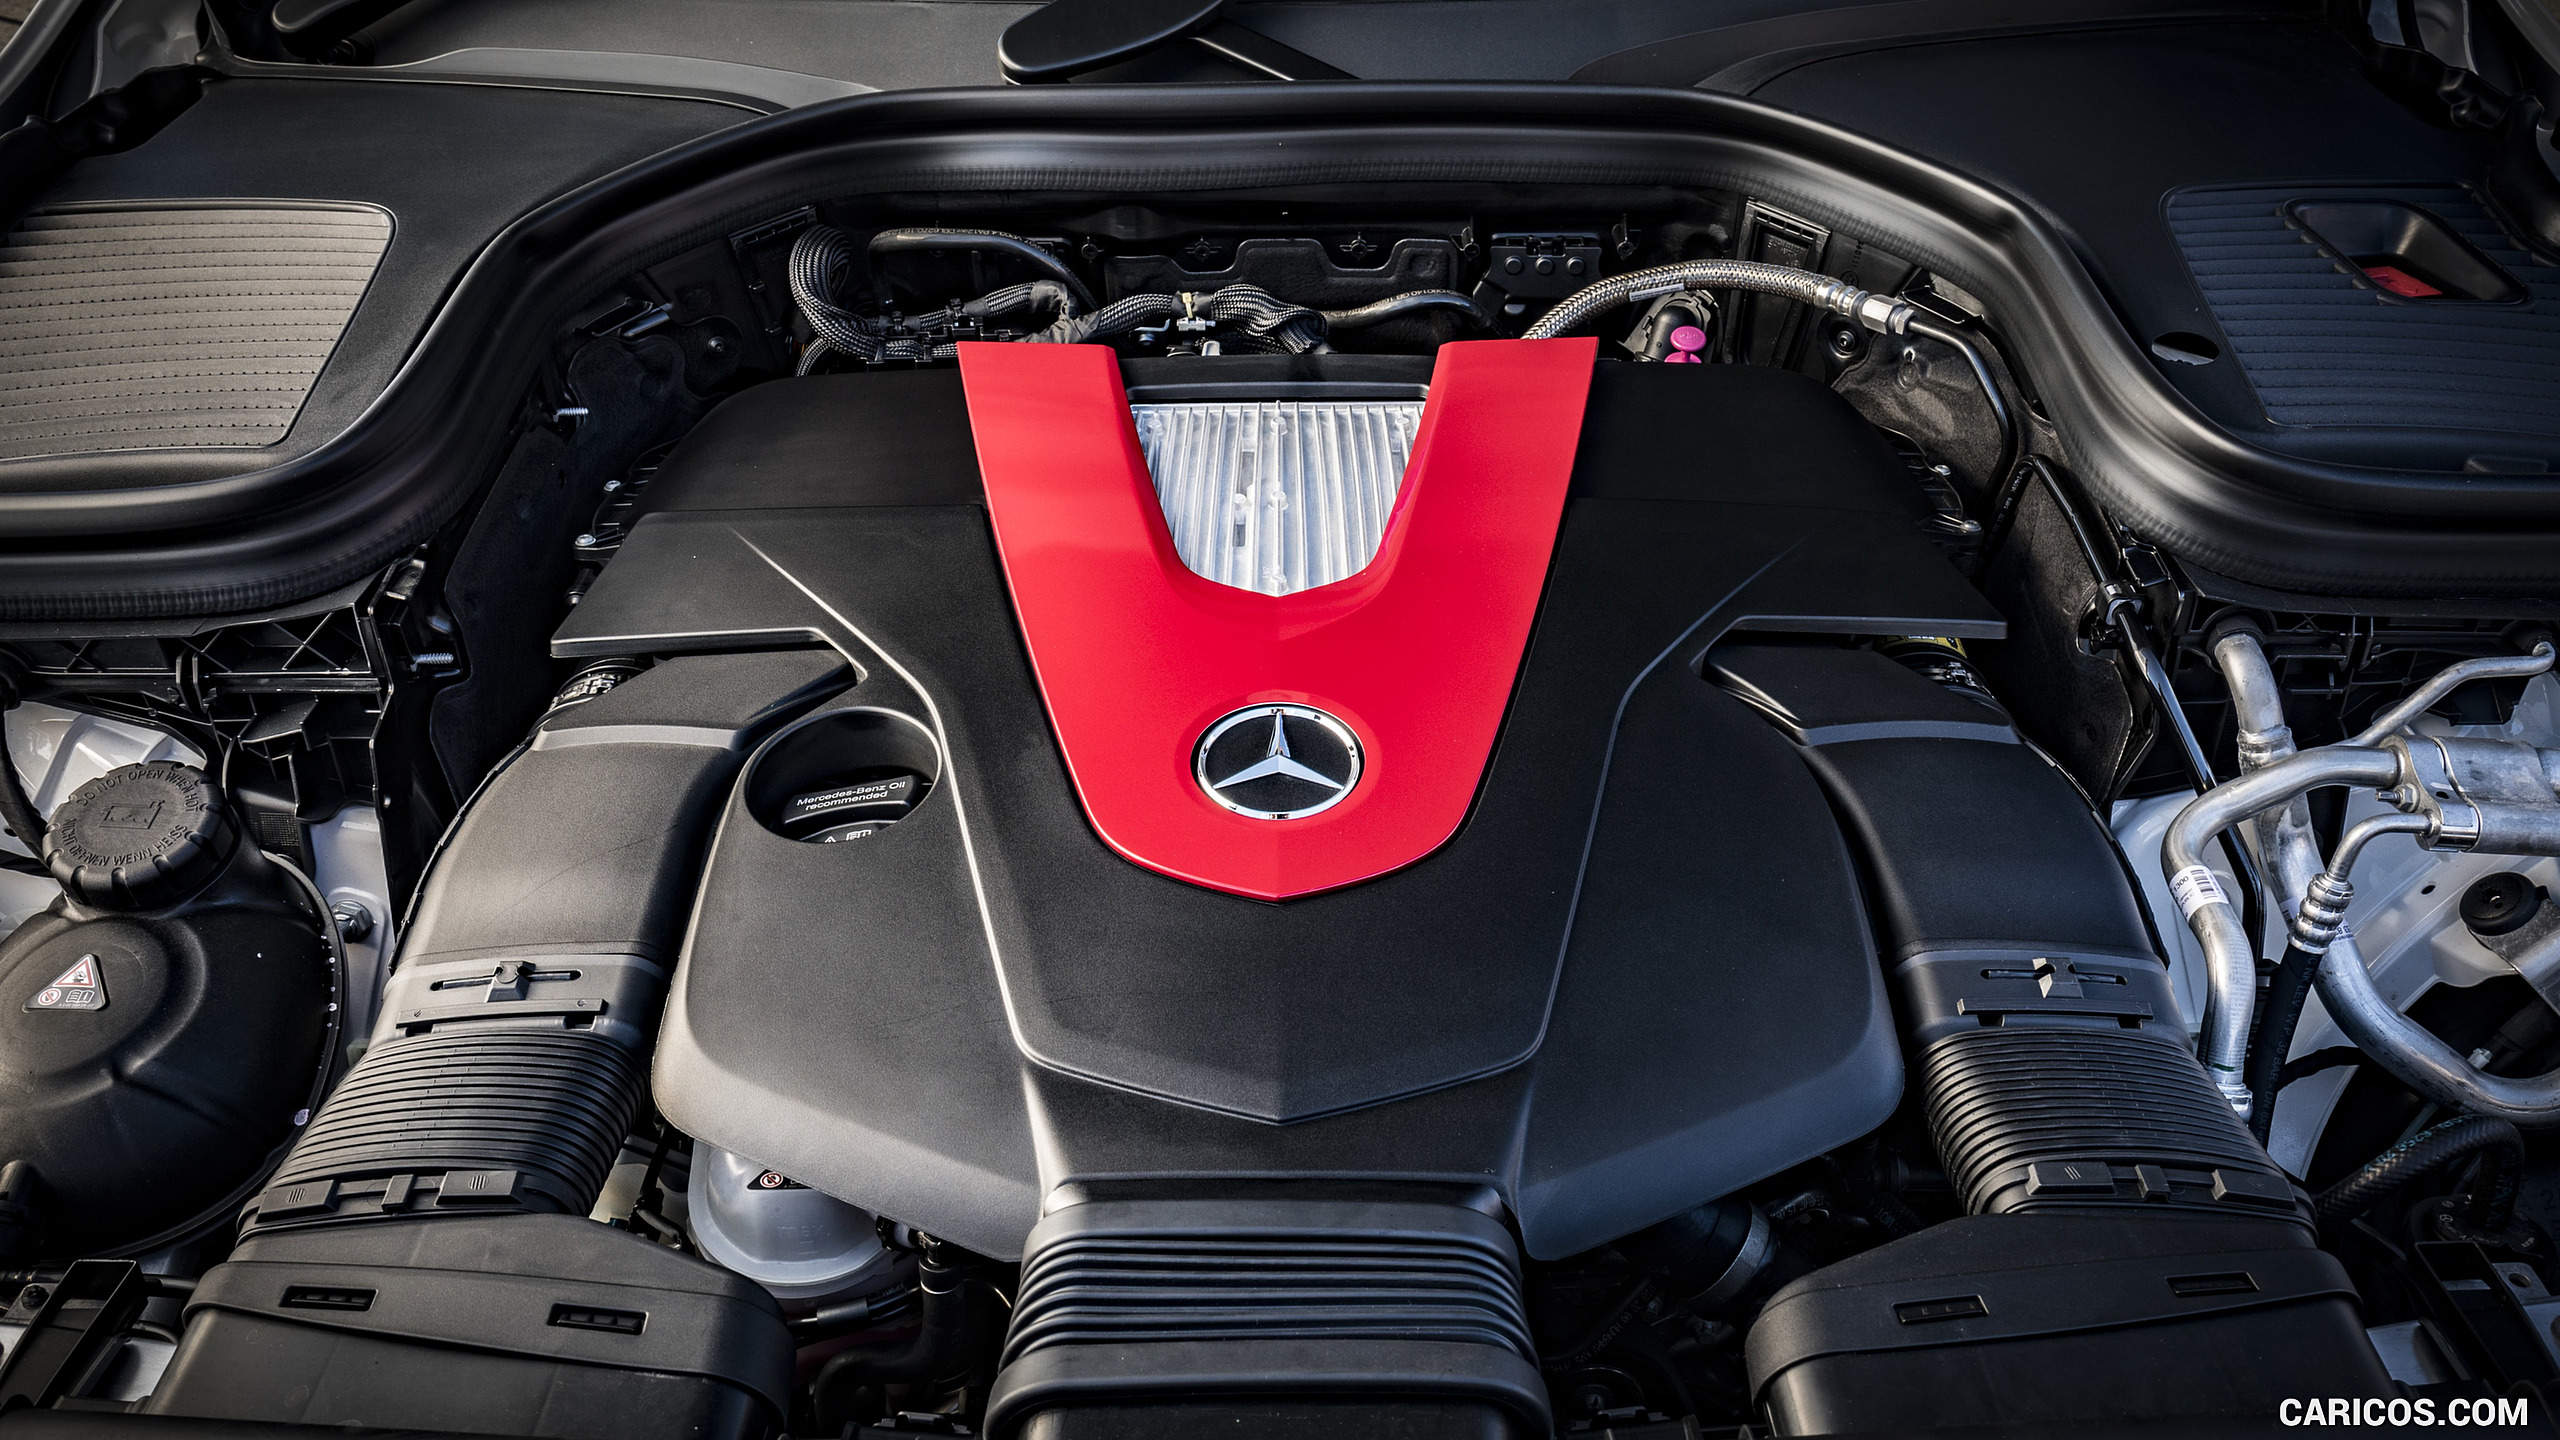 2017 Mercedes-AMG GLC 43 4MATIC (UK-Spec) - Engine, #70 of 108